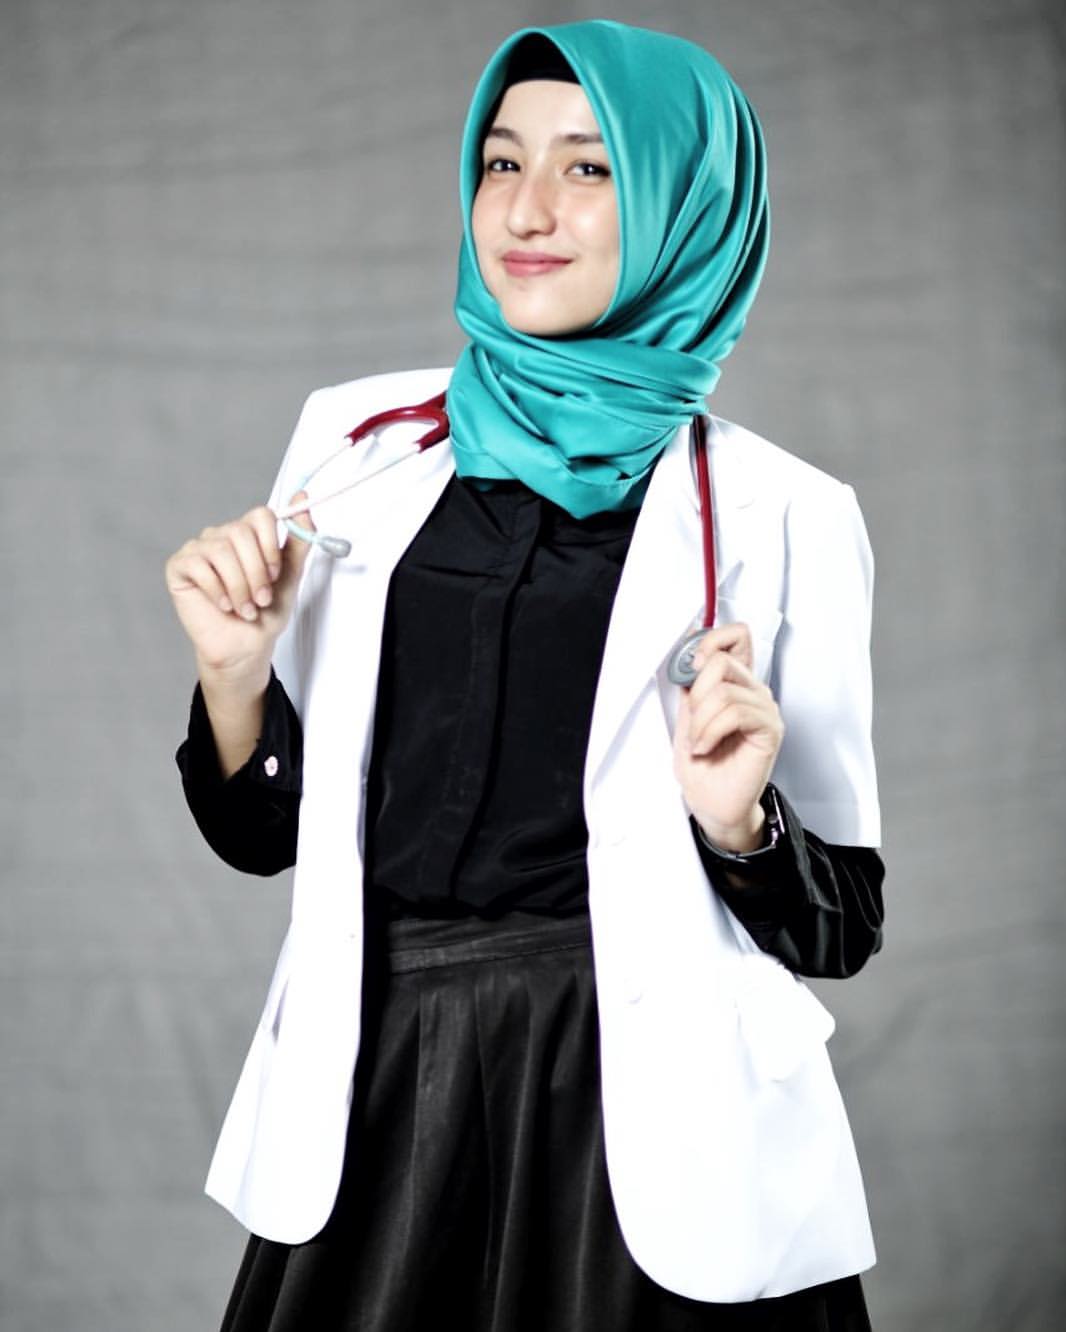 10 Dokter Paling Cantik Dan Cetar Di Indonesia Bikin Kamu Pengen Di